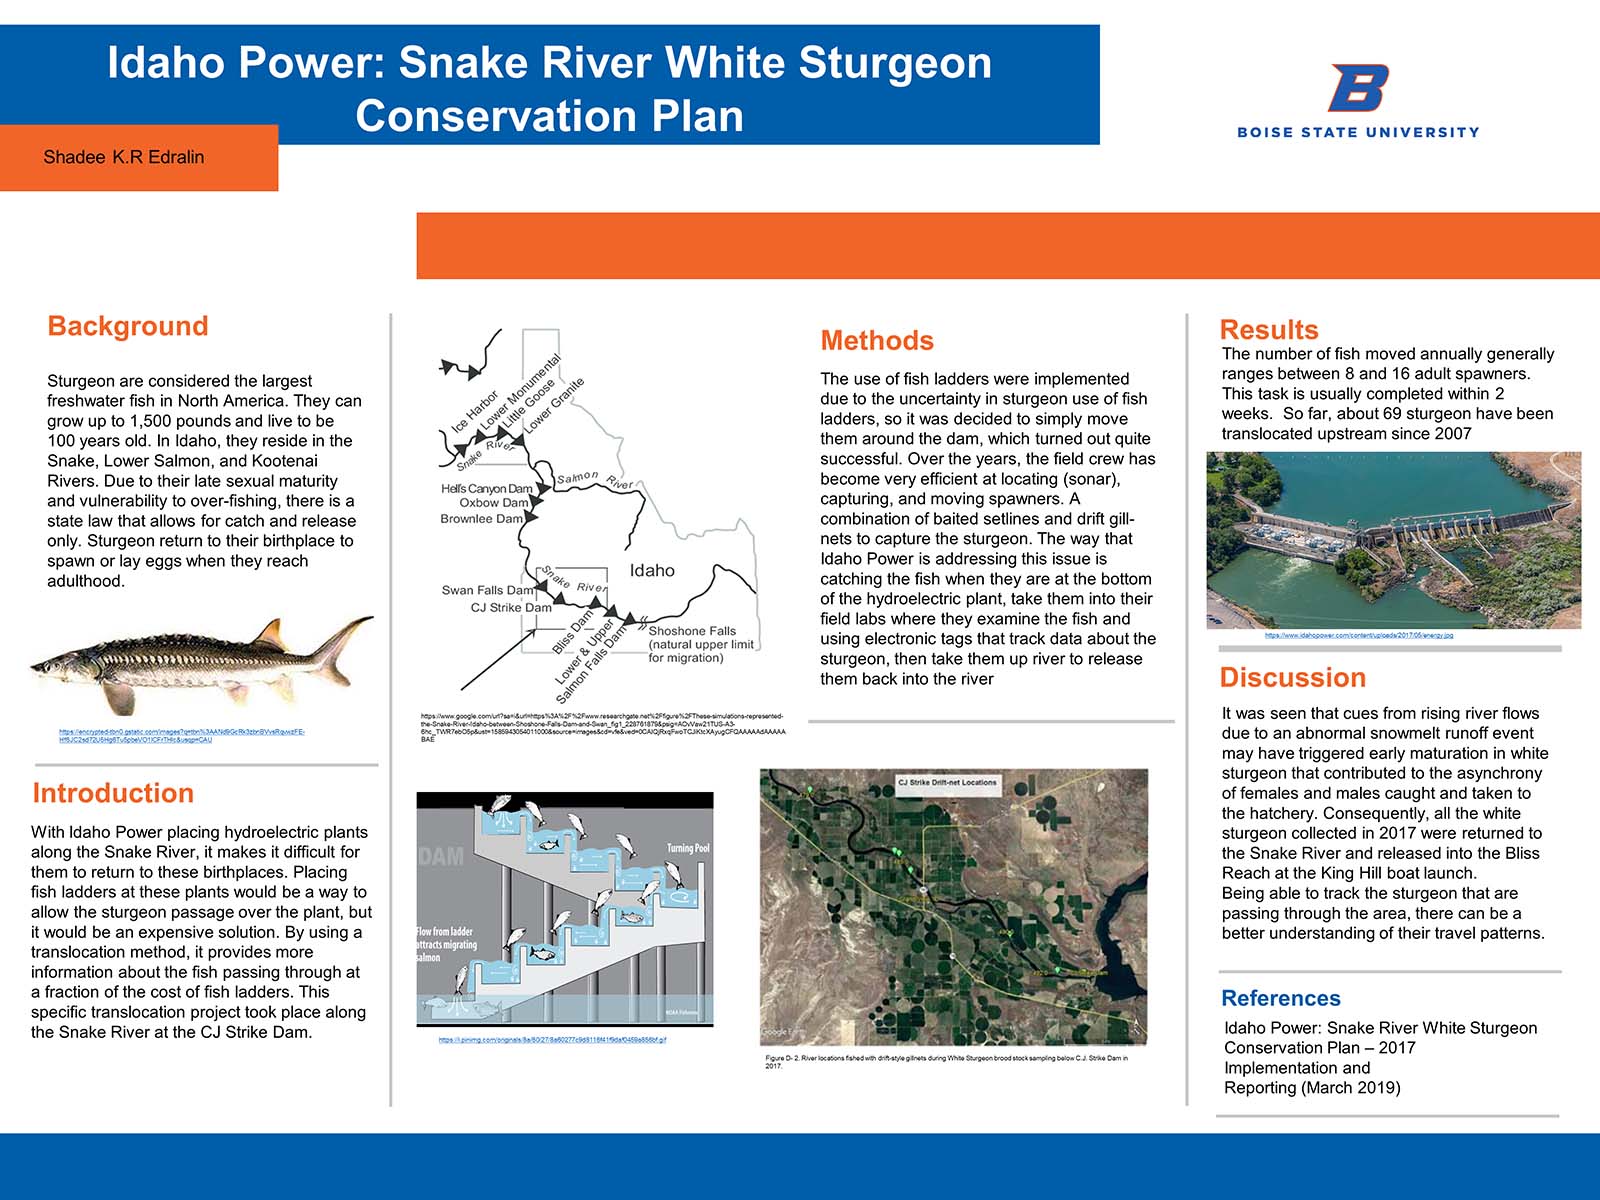 58. Idaho Power: Snake River White Sturgeon Conservation Plan -  Undergraduate Research